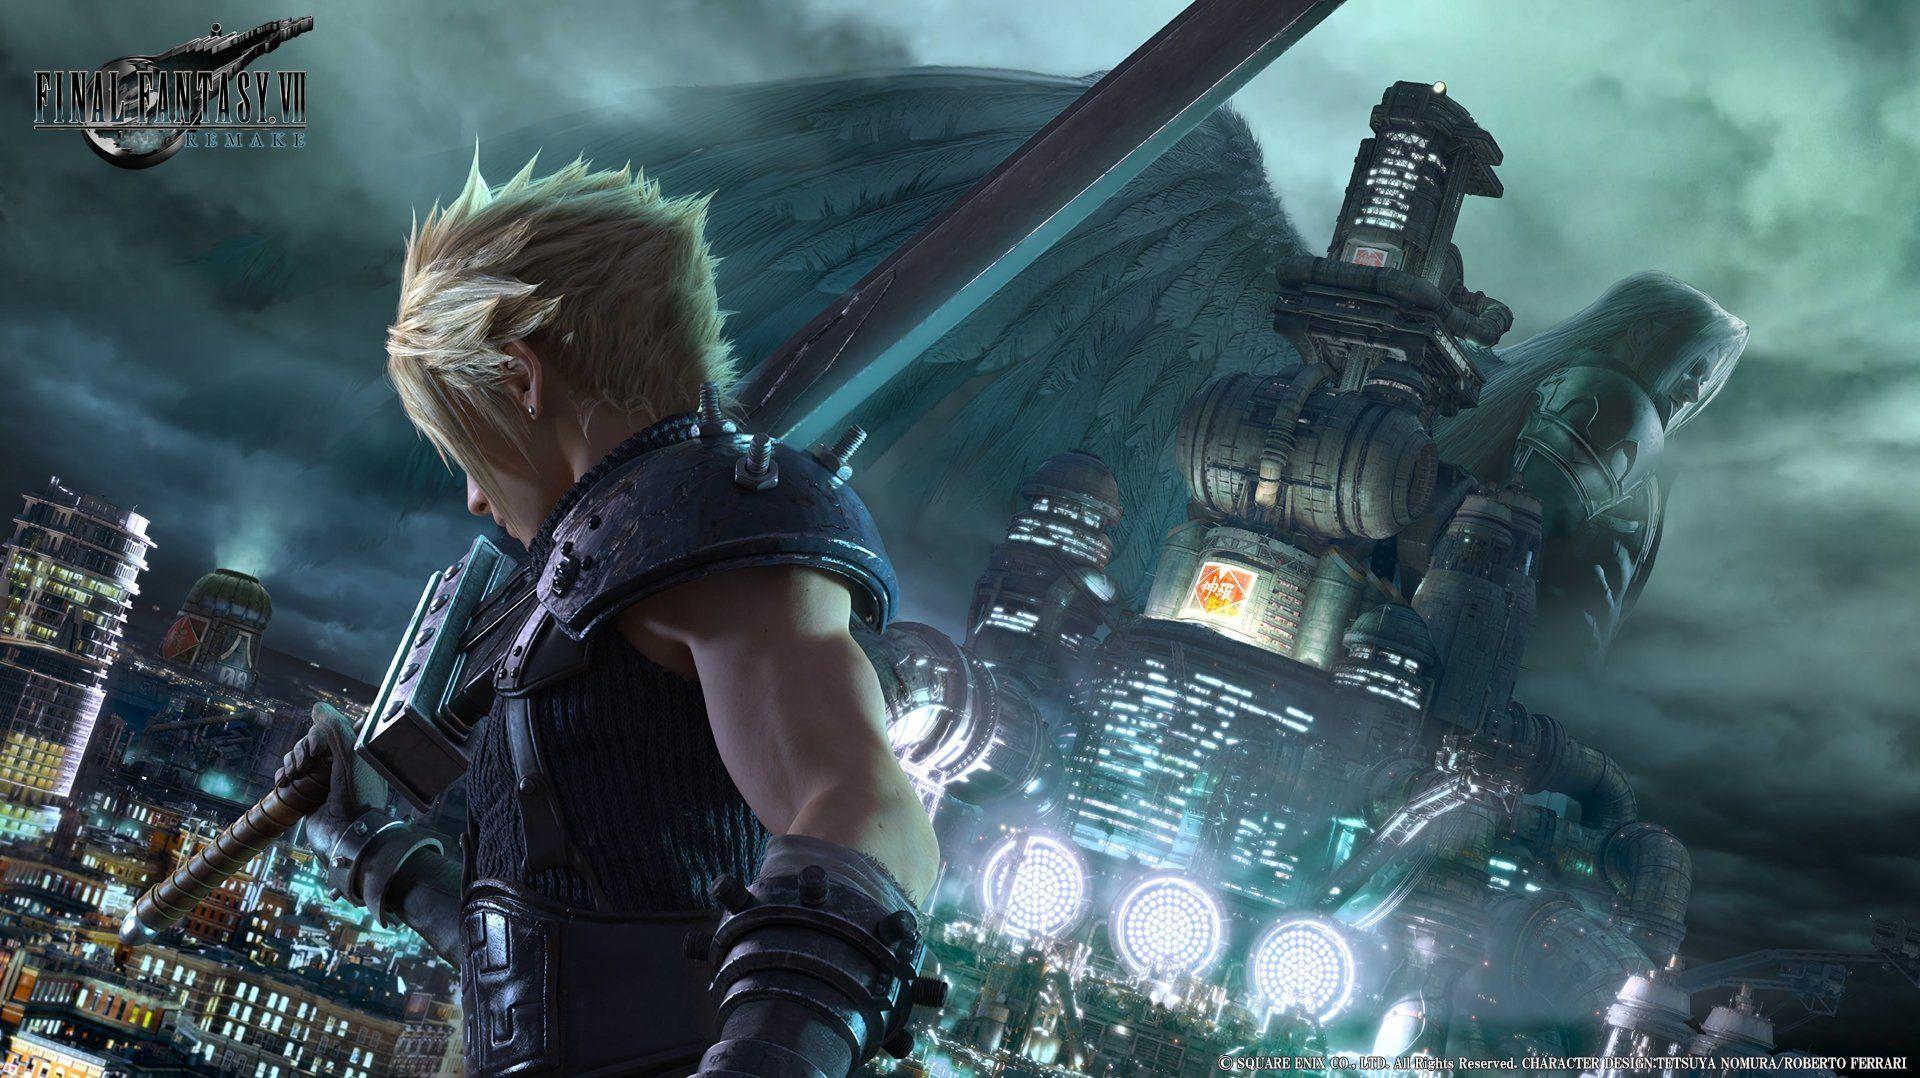 Final Fantasy Vii Remake Wallpapers Top Free Final Fantasy Vii Remake Backgrounds Wallpaperaccess